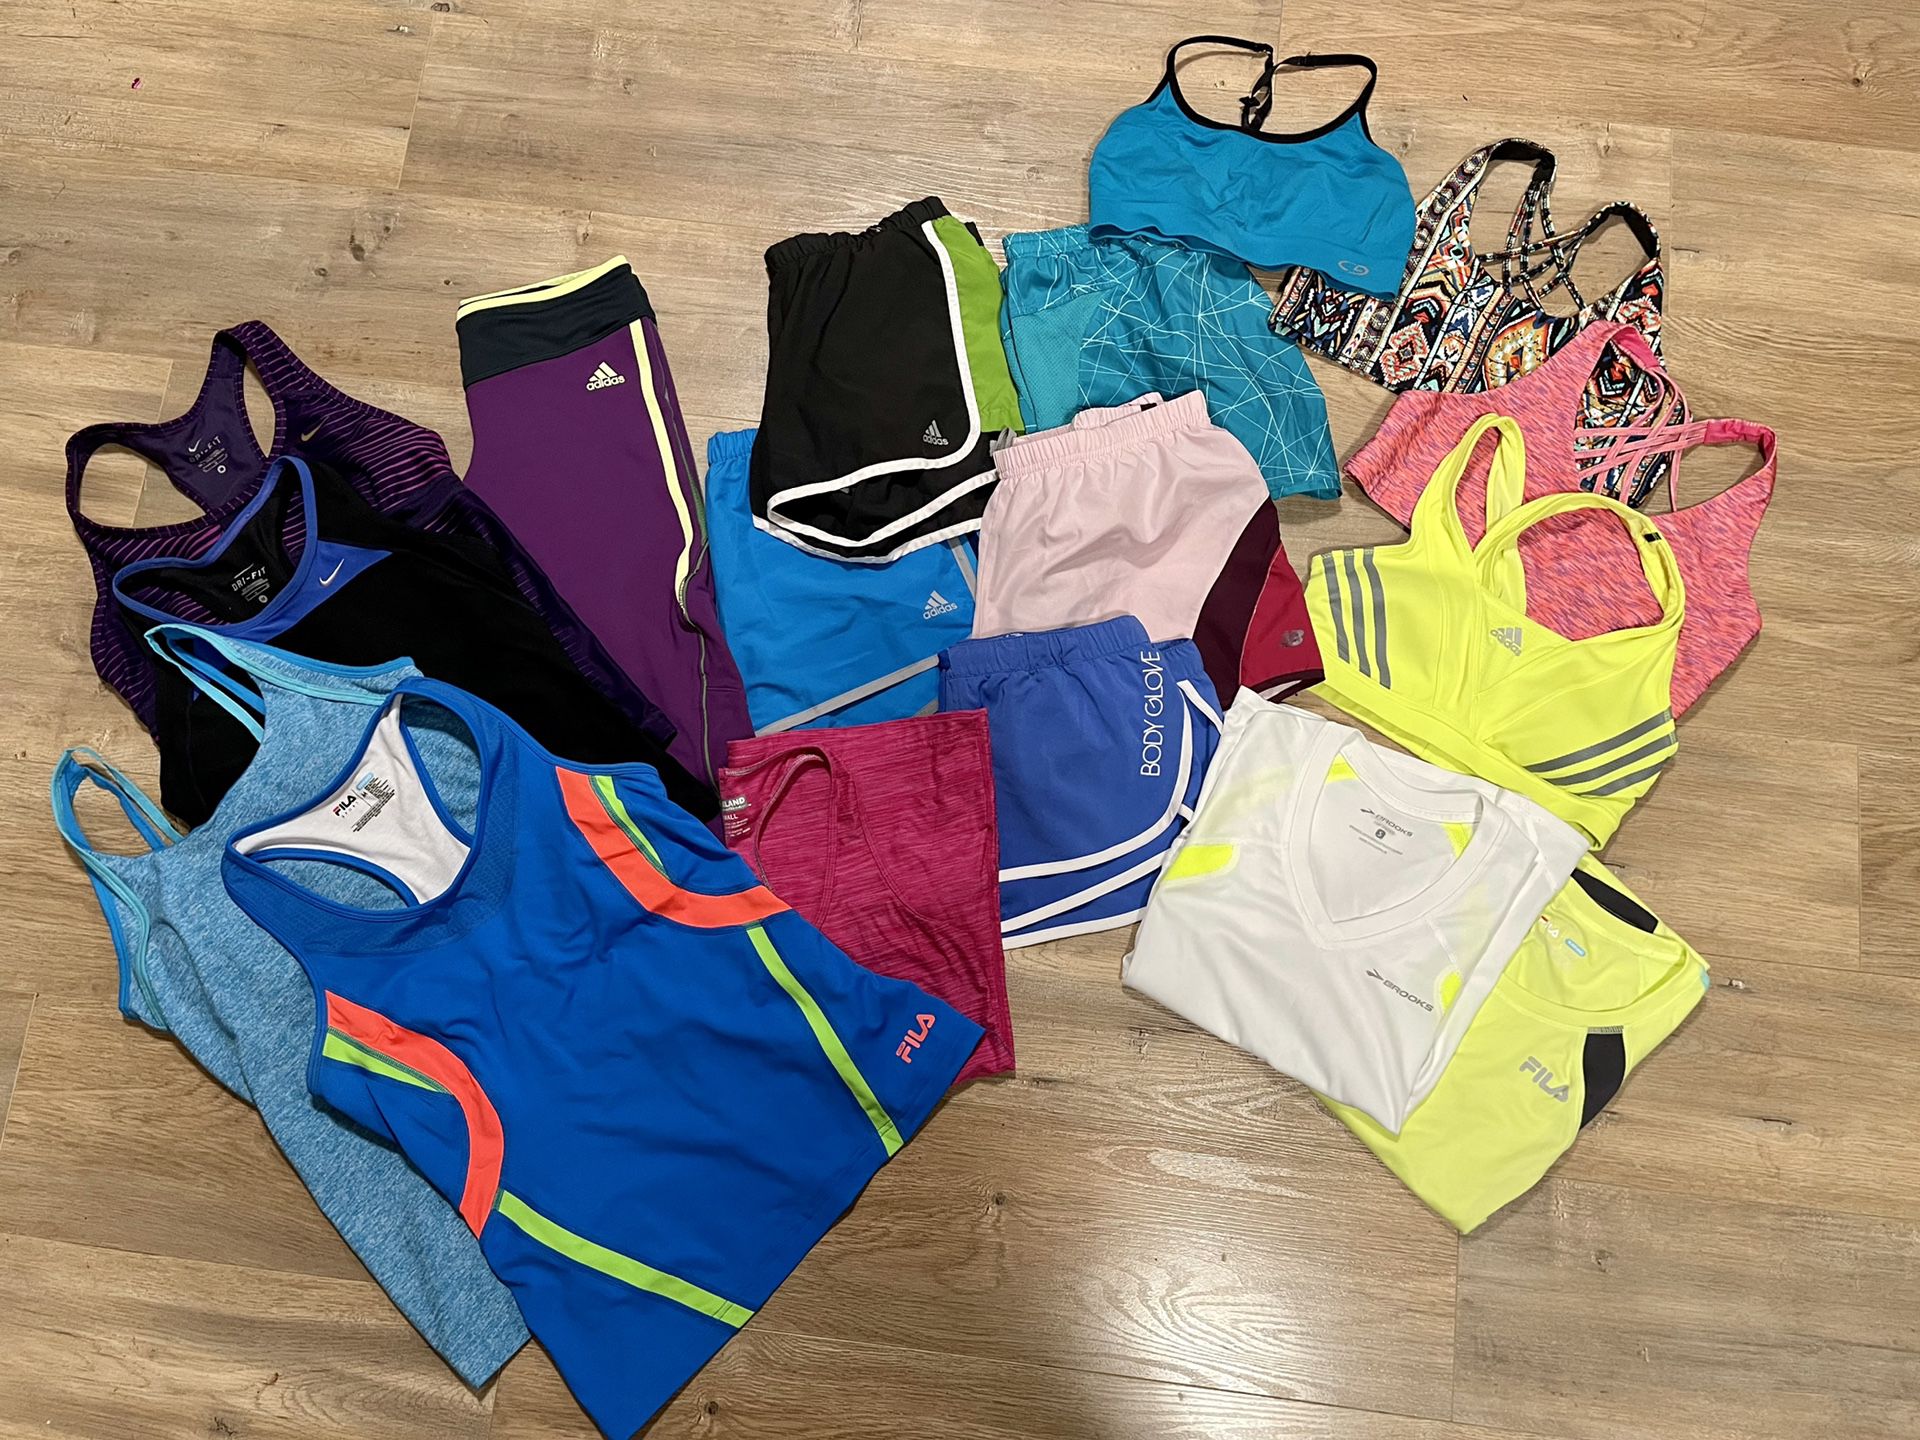 Women’s workout clothes size Medium, Adidas, Nike, Brooks, 17 pieces, shorts, tanks, capris